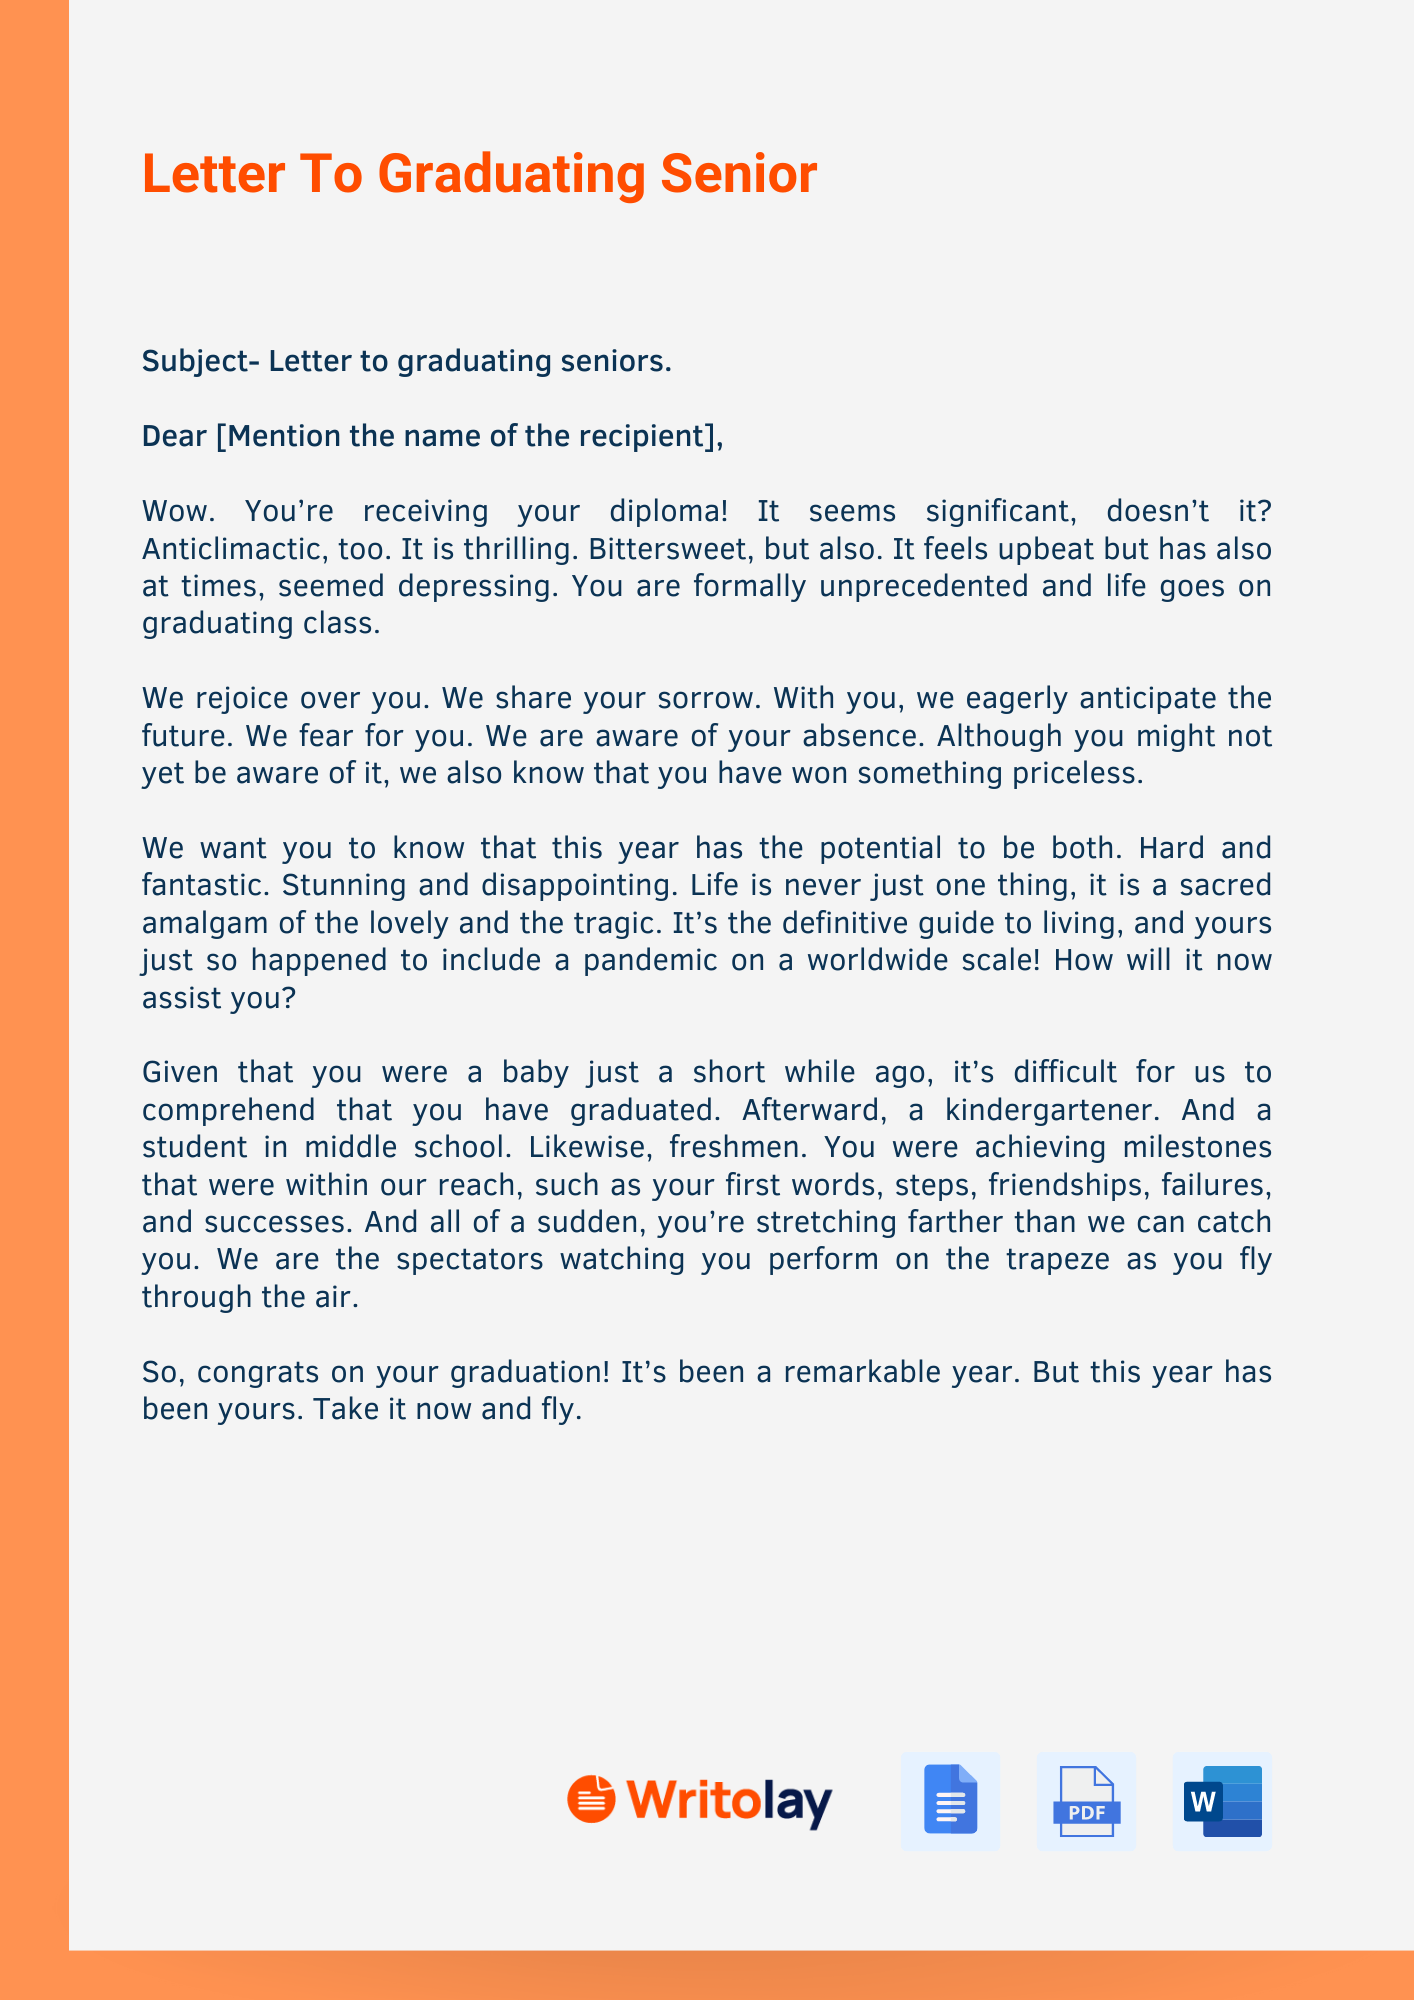 Letter To Graduating Senior 1 